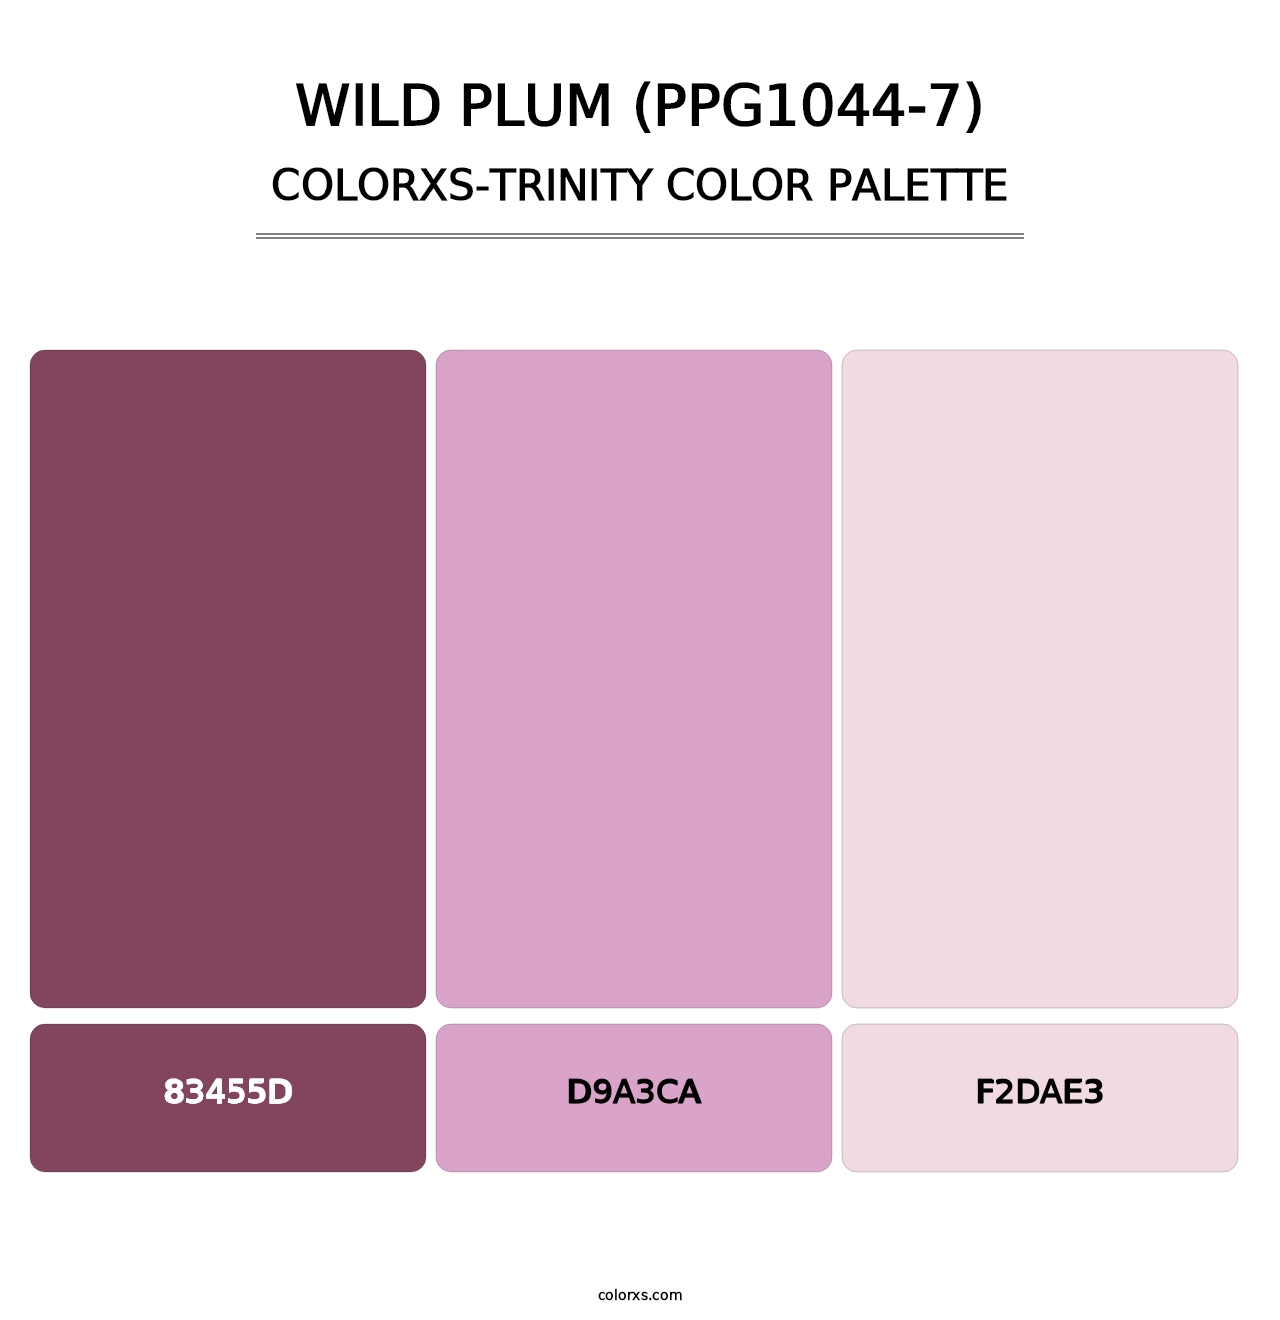 Wild Plum (PPG1044-7) - Colorxs Trinity Palette